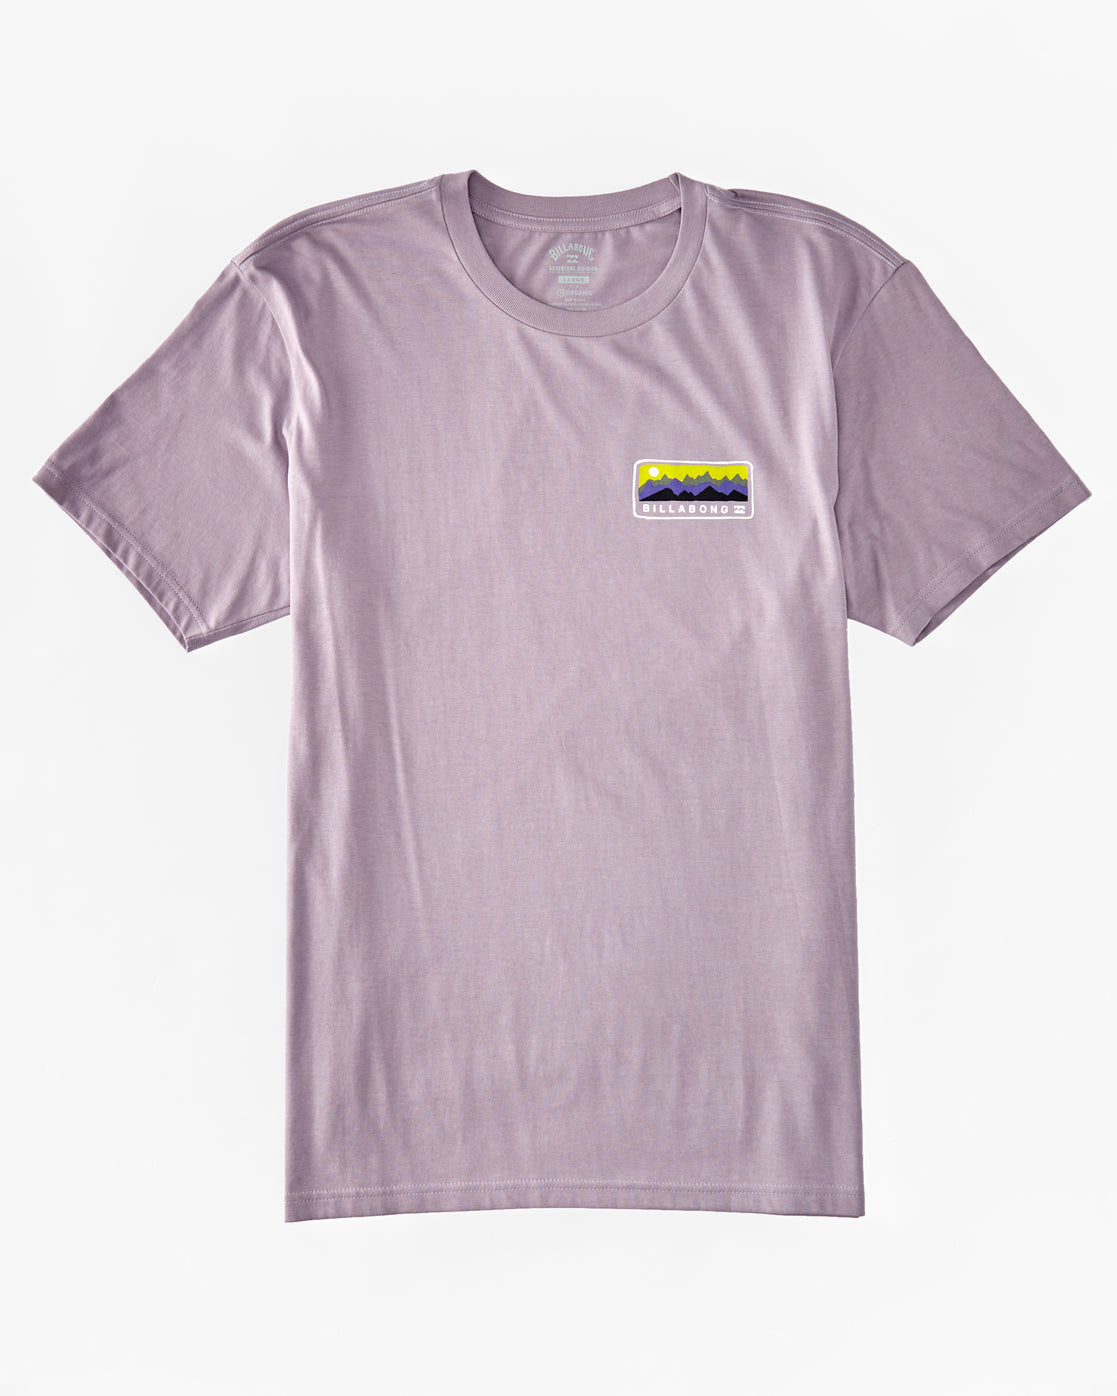 Range T-Shirt - Purple Ash